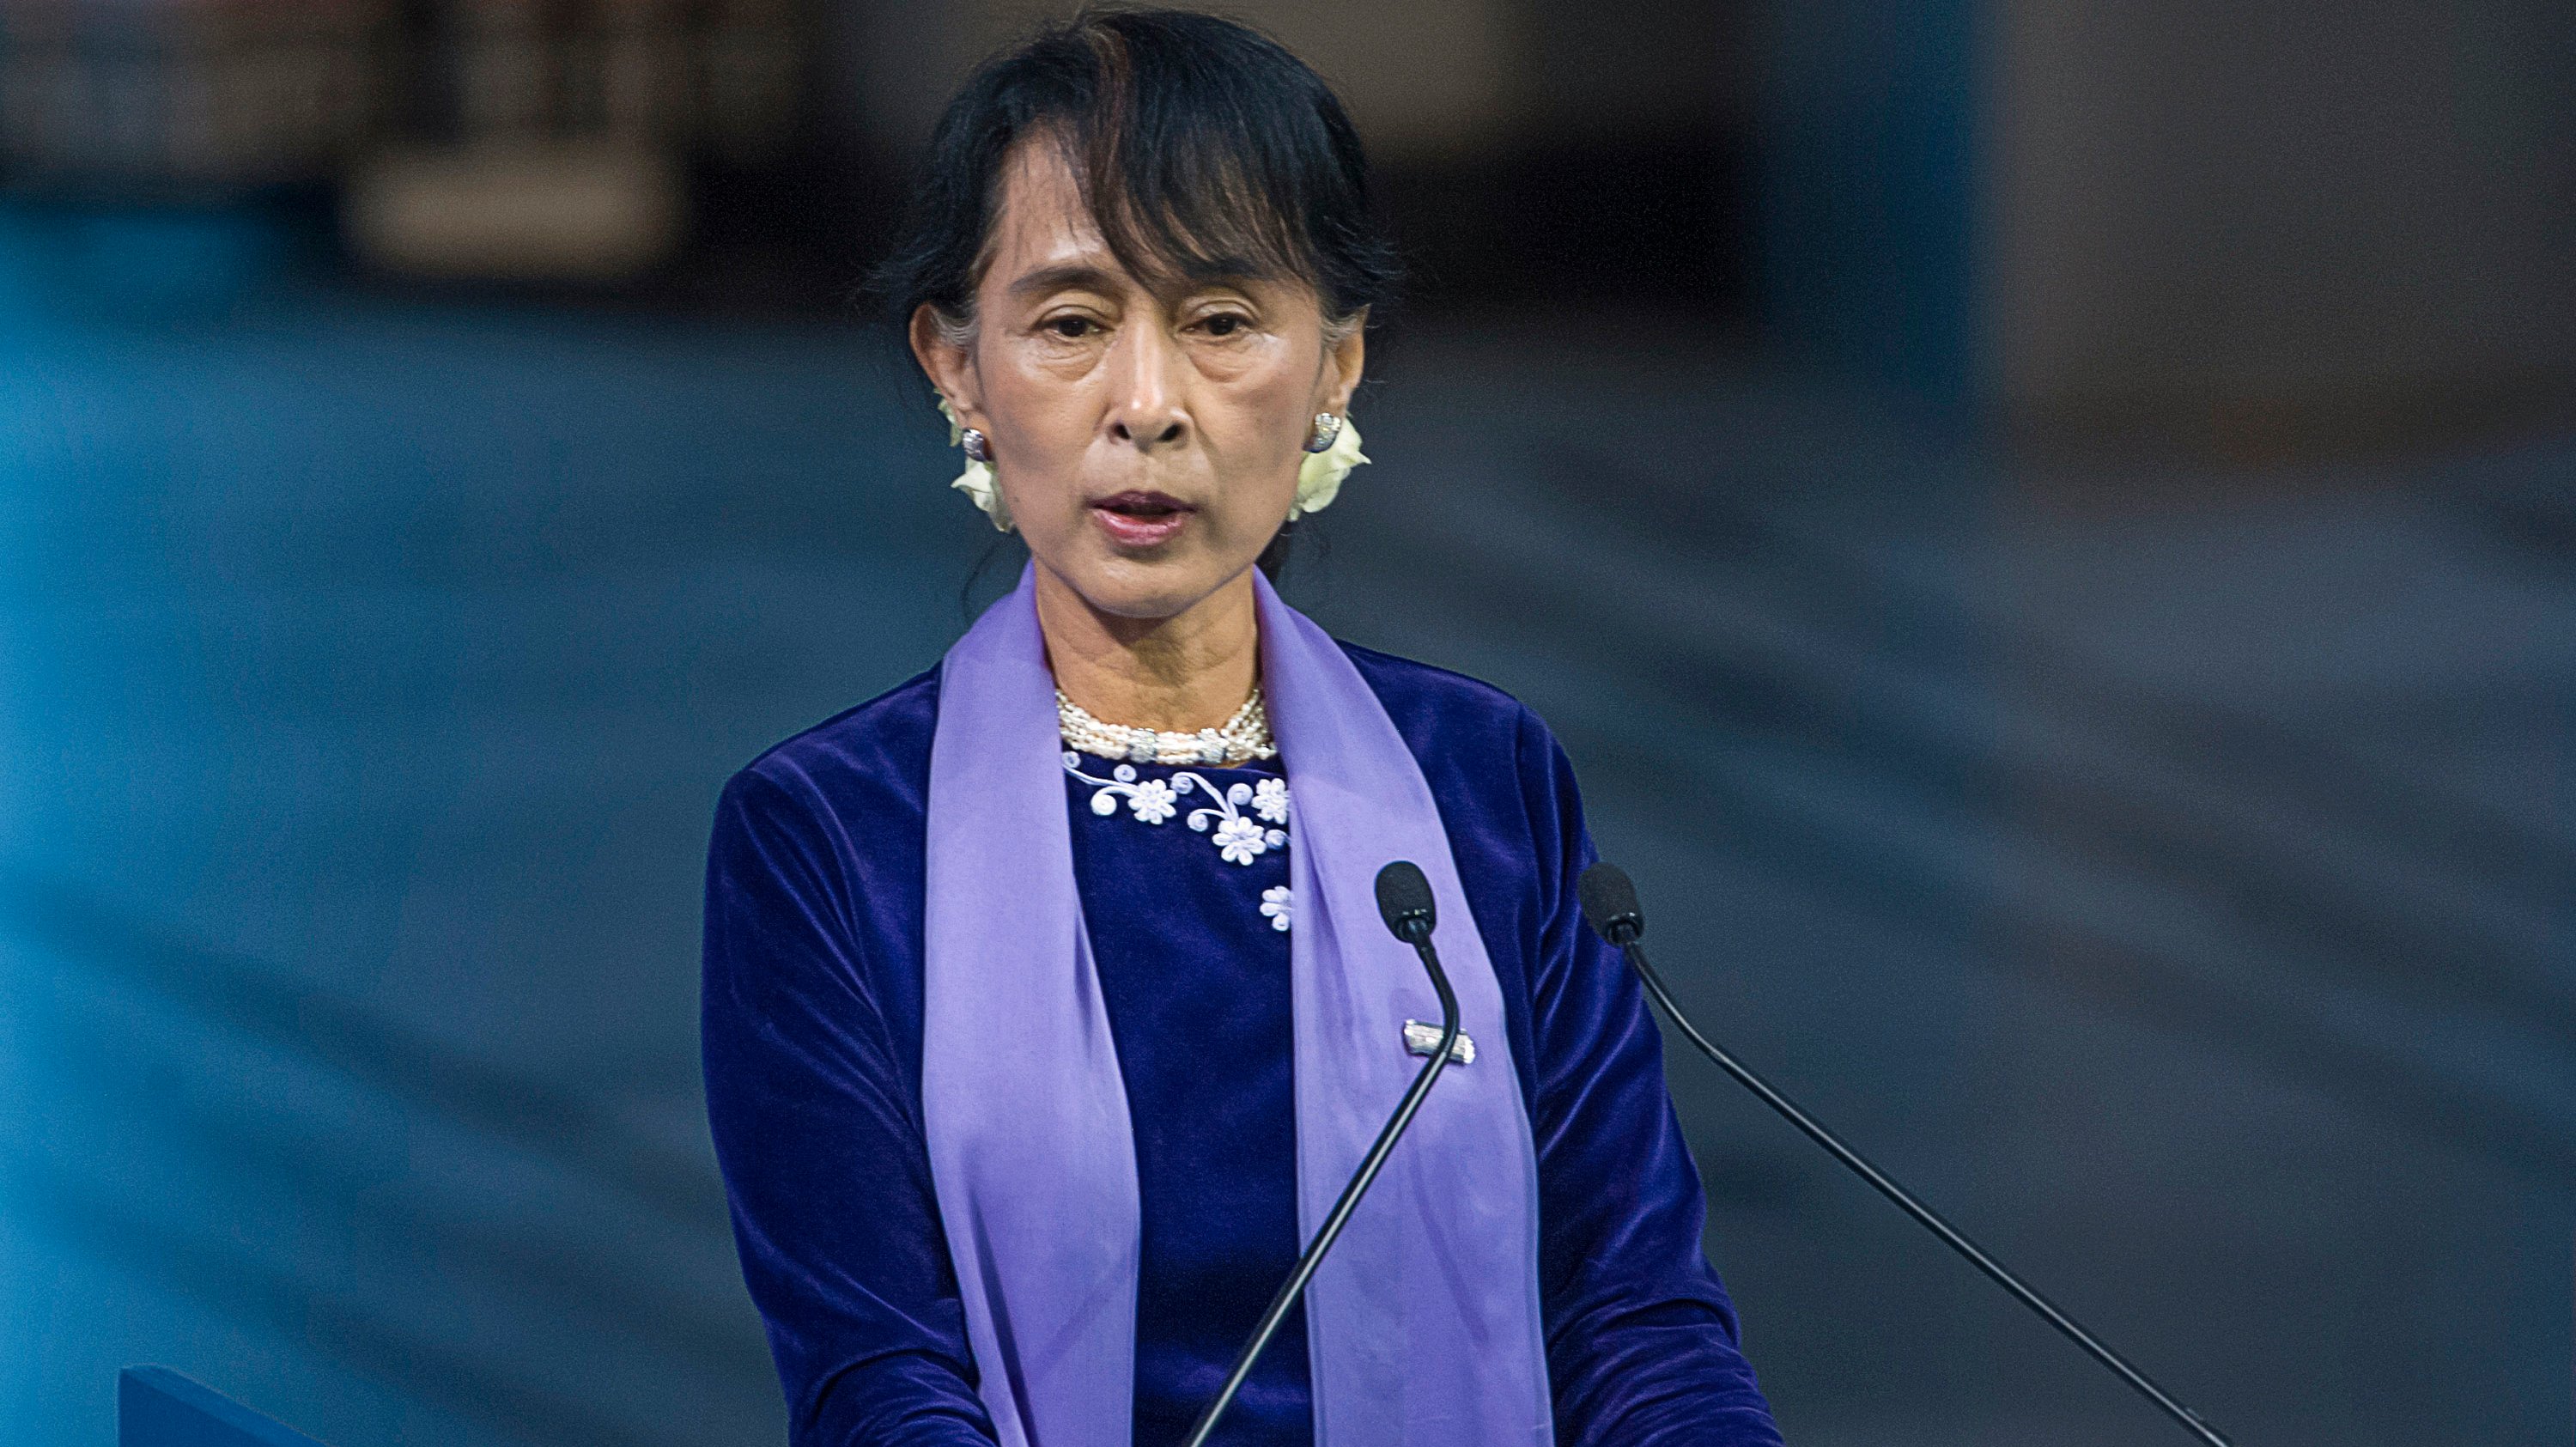 Nobel Lecture by Laureate Aung San Suu Kyi